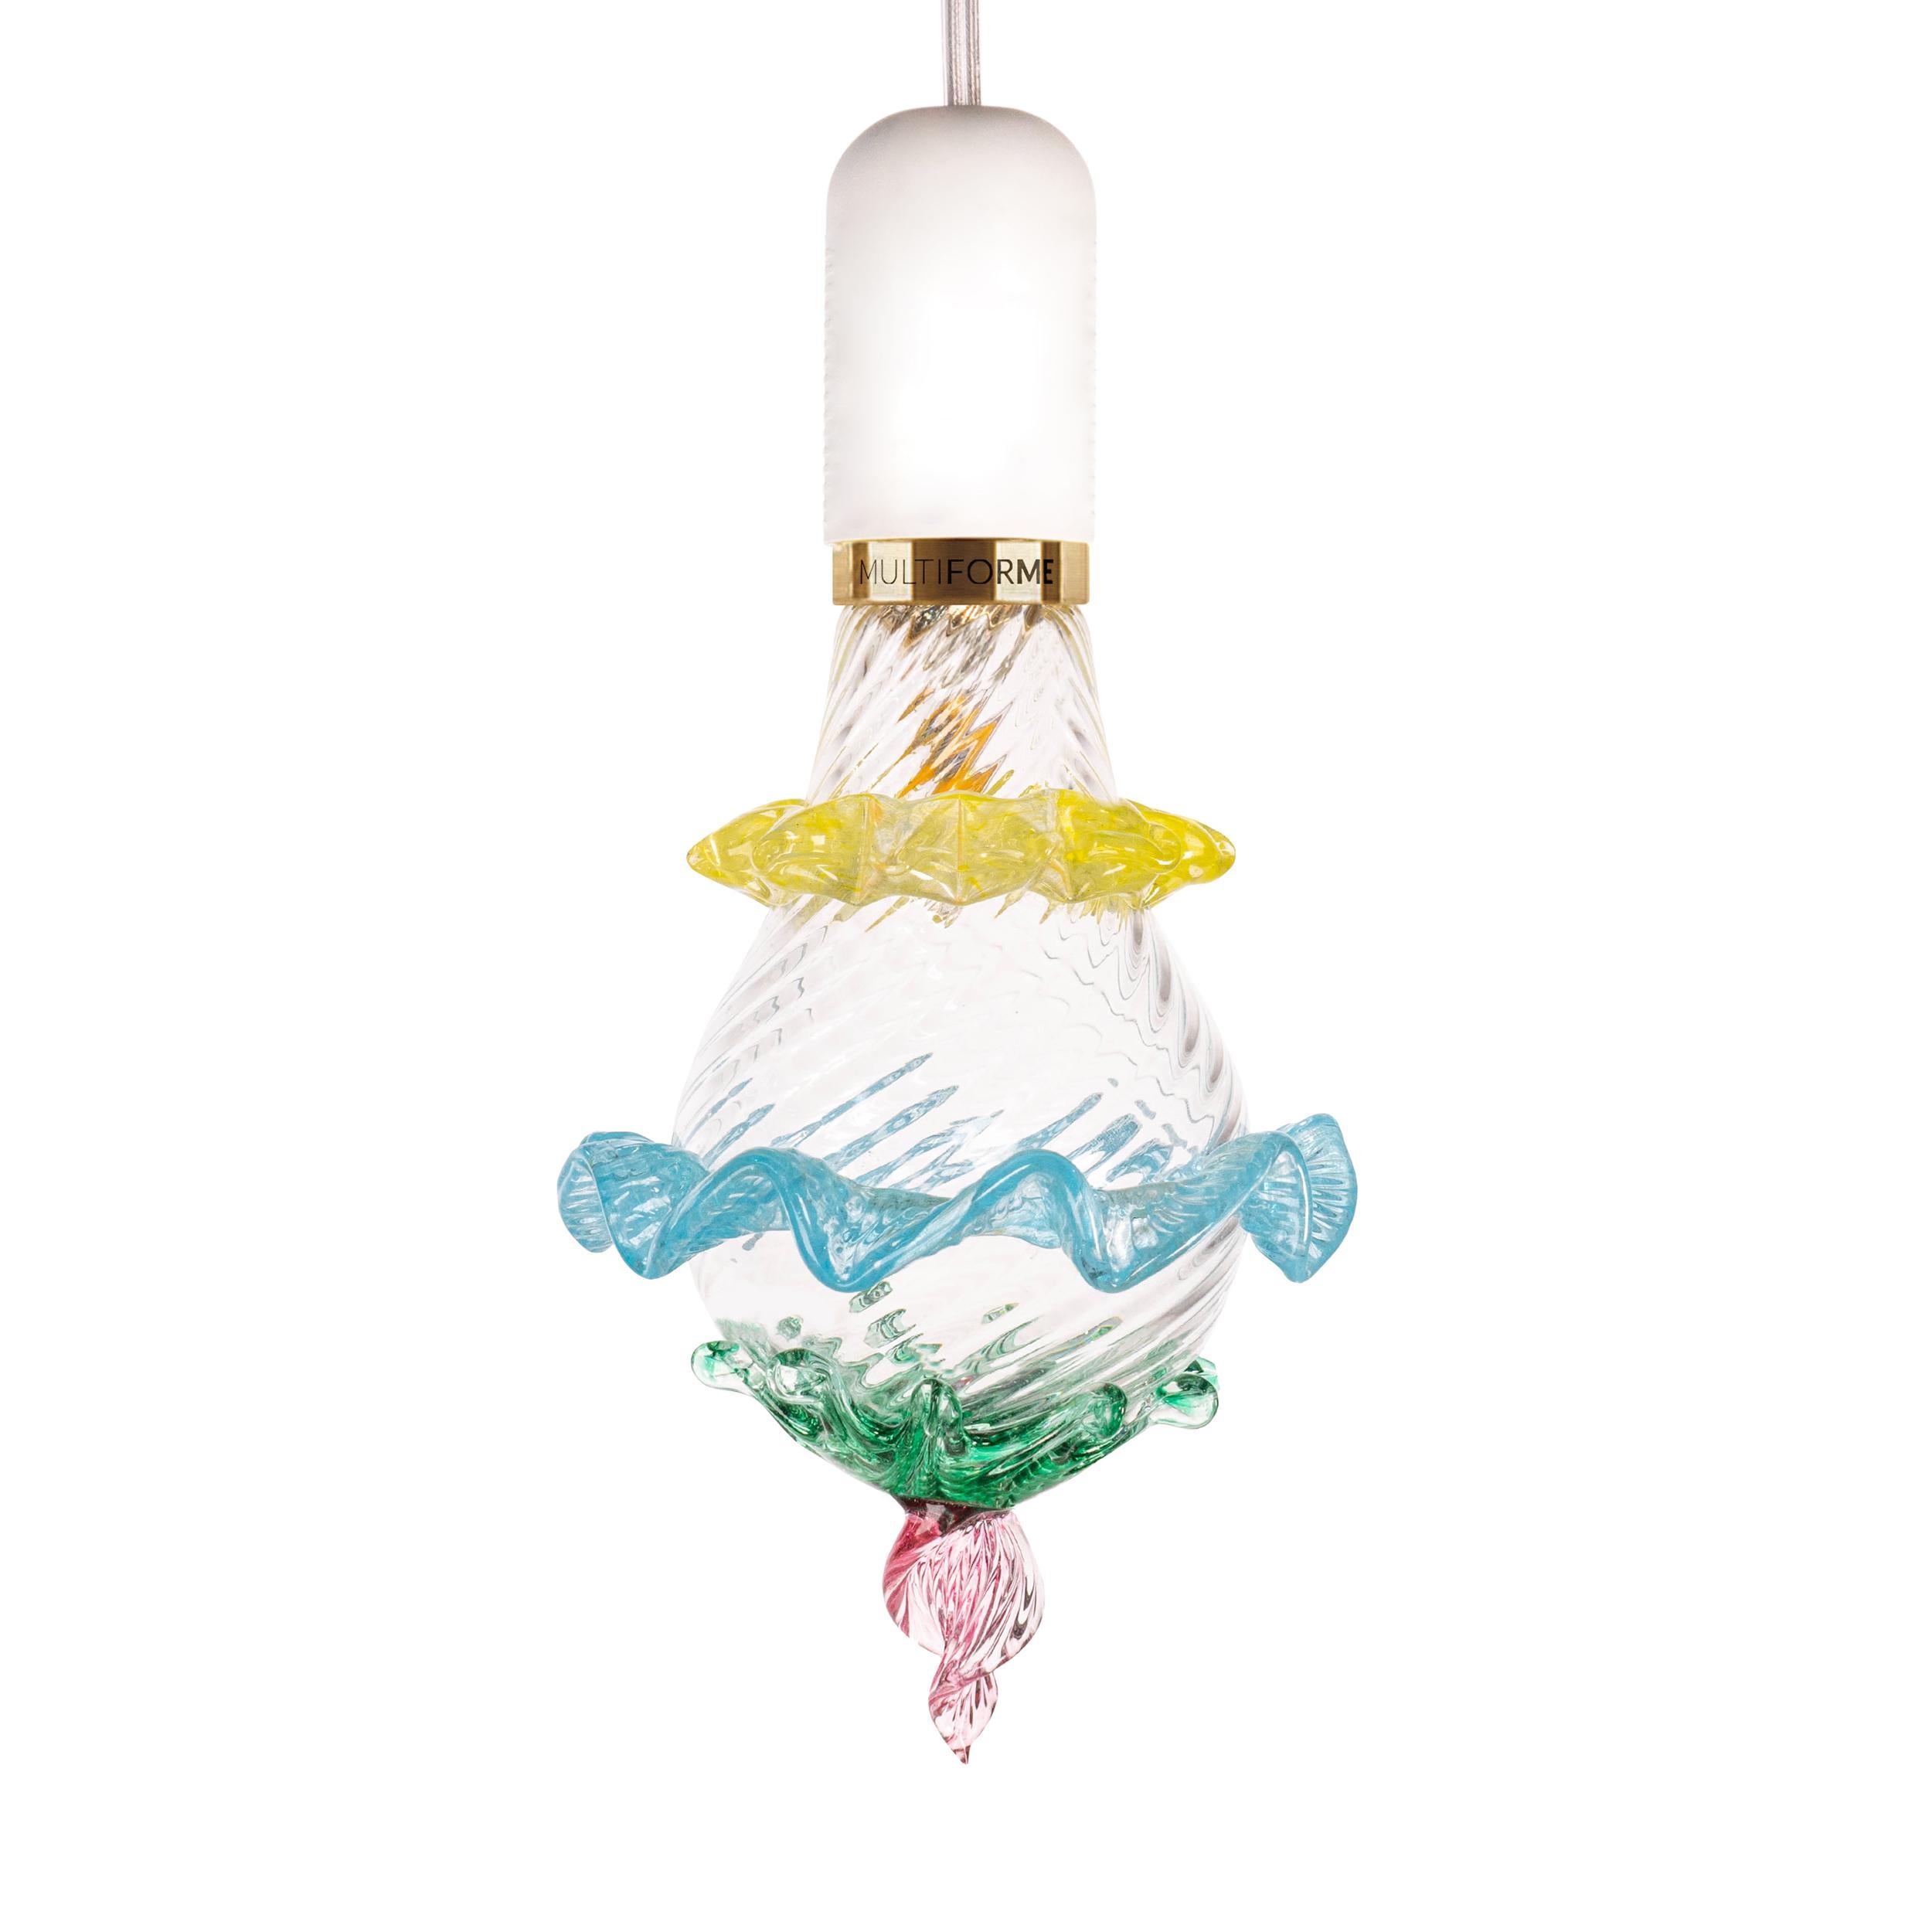 Italian Artistic glass lightbulb chandelier Murano Bulb Marcantonio X Multiforme #03 For Sale